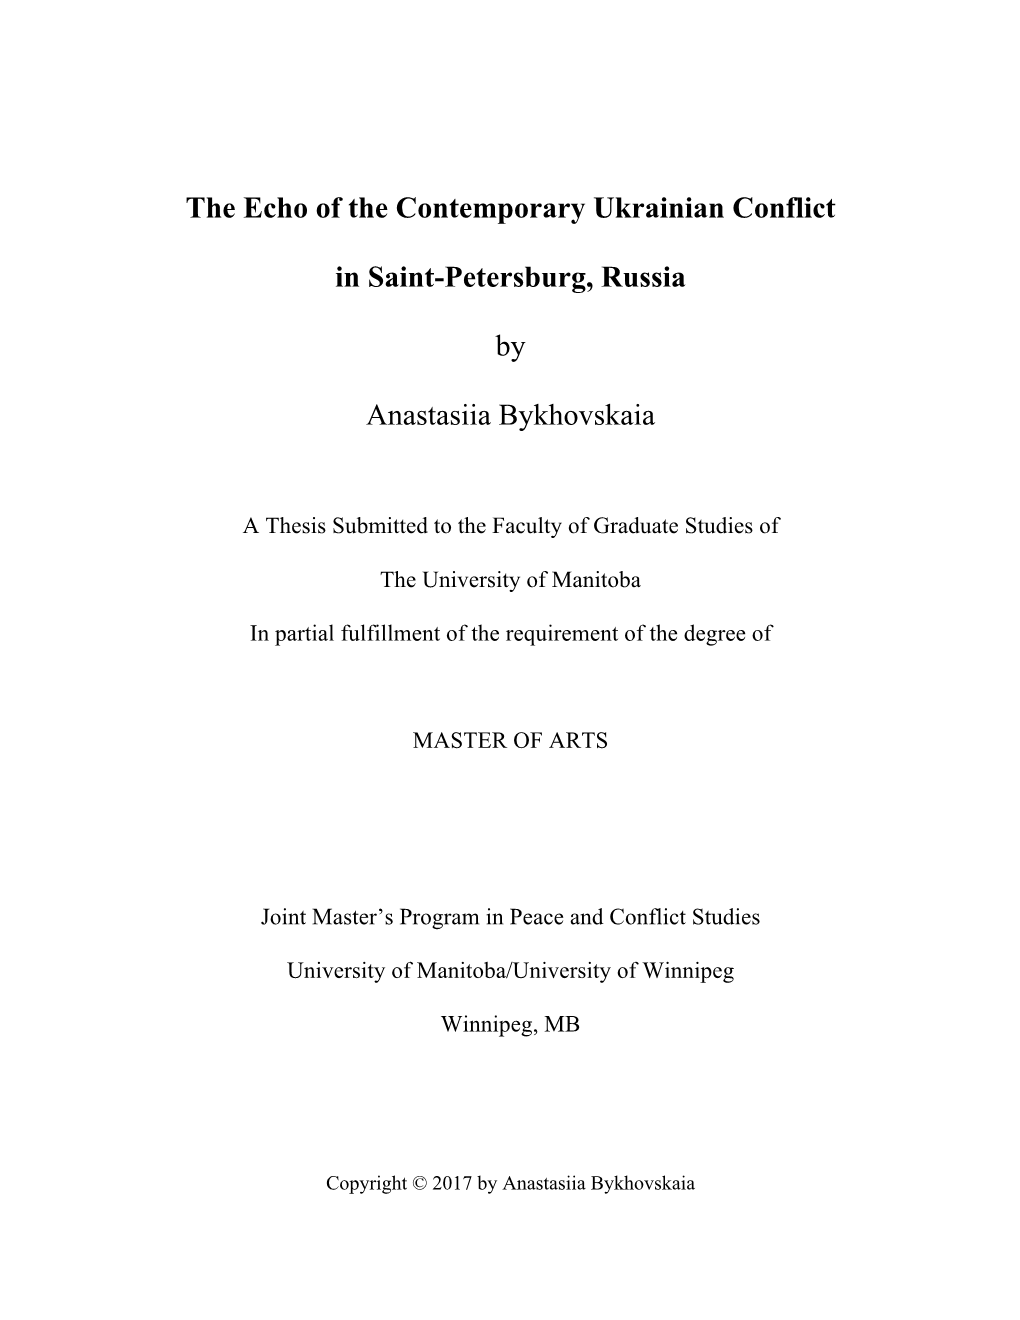 Echo of the Contemporary Ukrainian Conflict in Saint-Petersburg, Russia